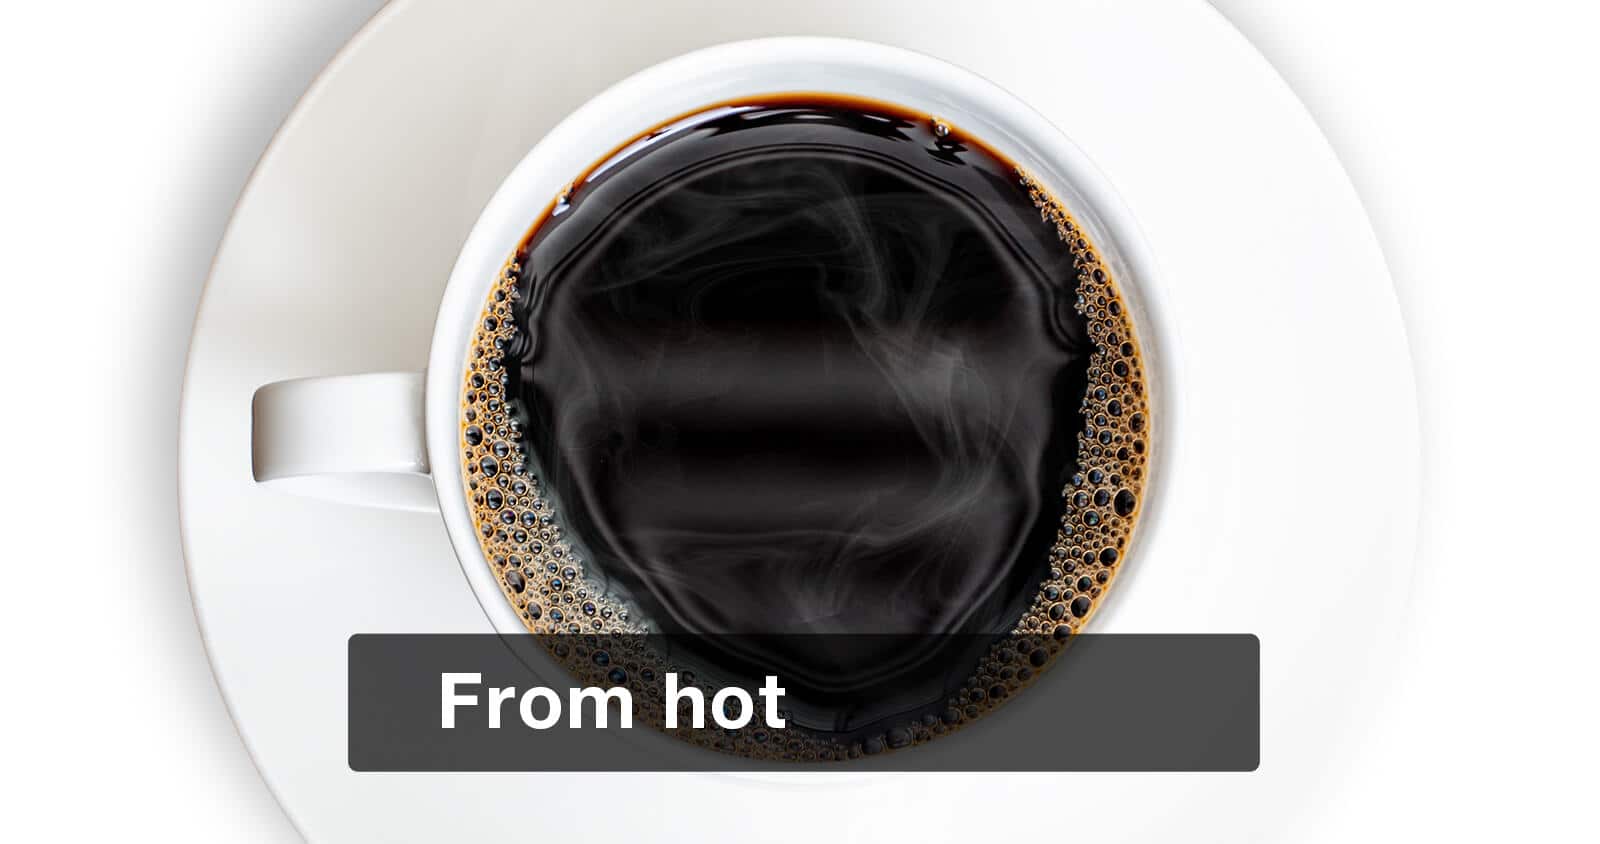 Hot Coffee made by Braun MultiServe Coffee machine